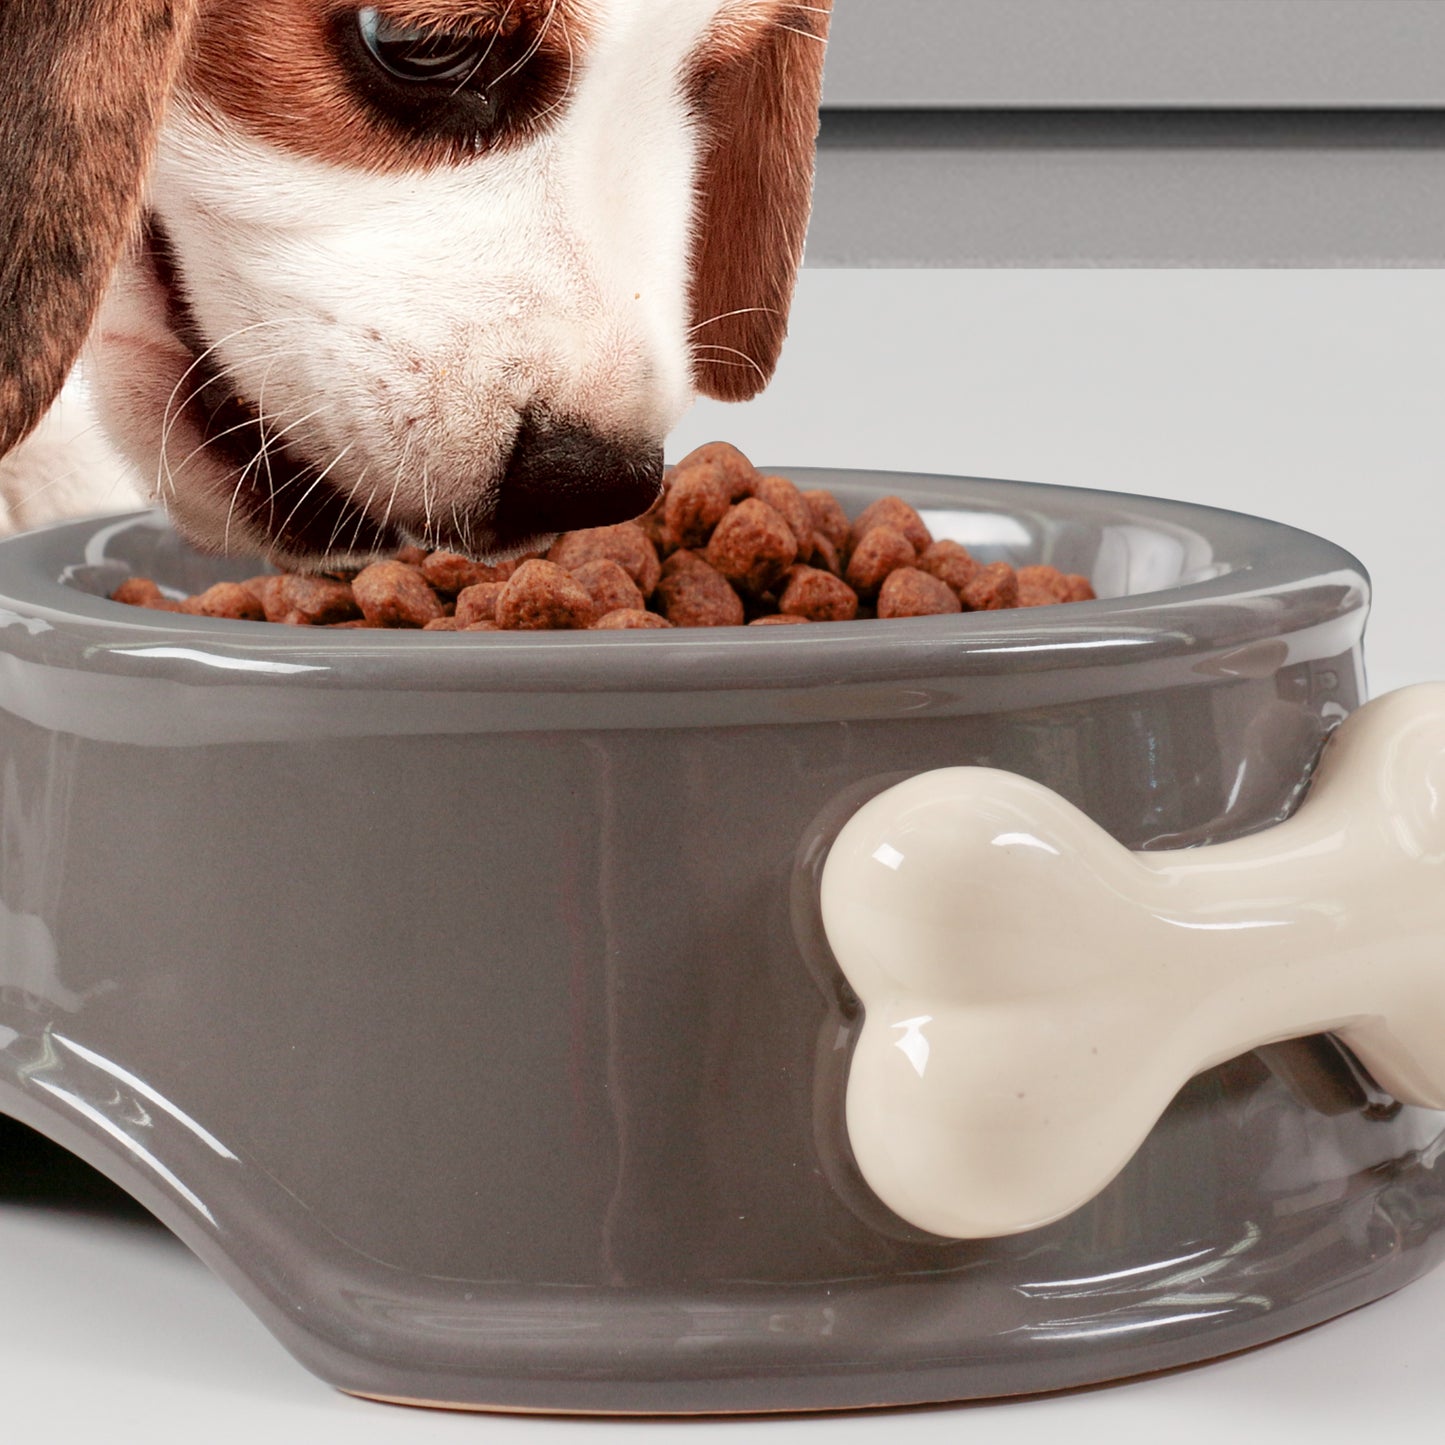 Banbury & Co Ceramic Dog Feeding Bowl